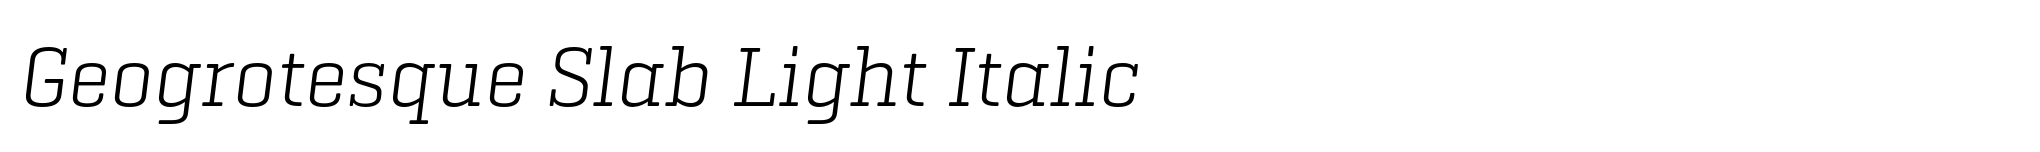 Geogrotesque Slab Light Italic image